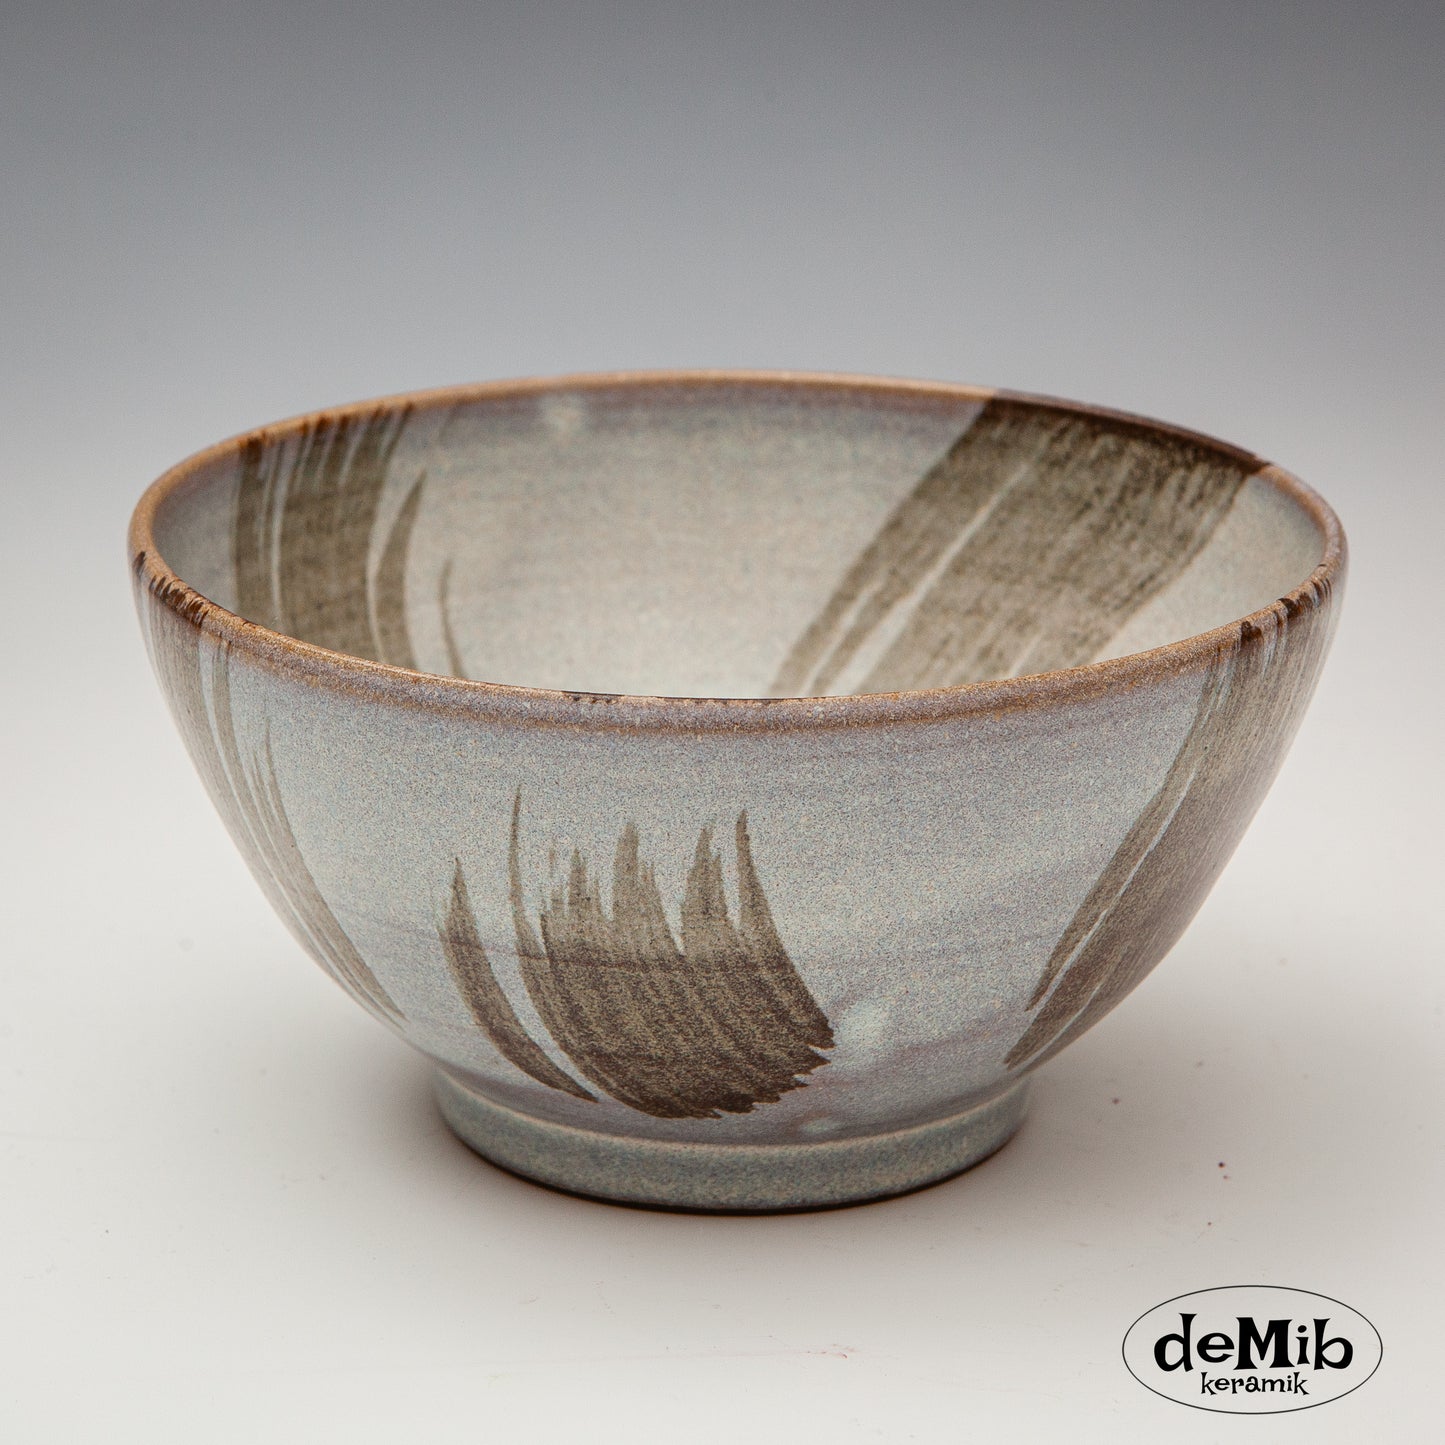 Small Stoneware Bowl - Light Sand Color